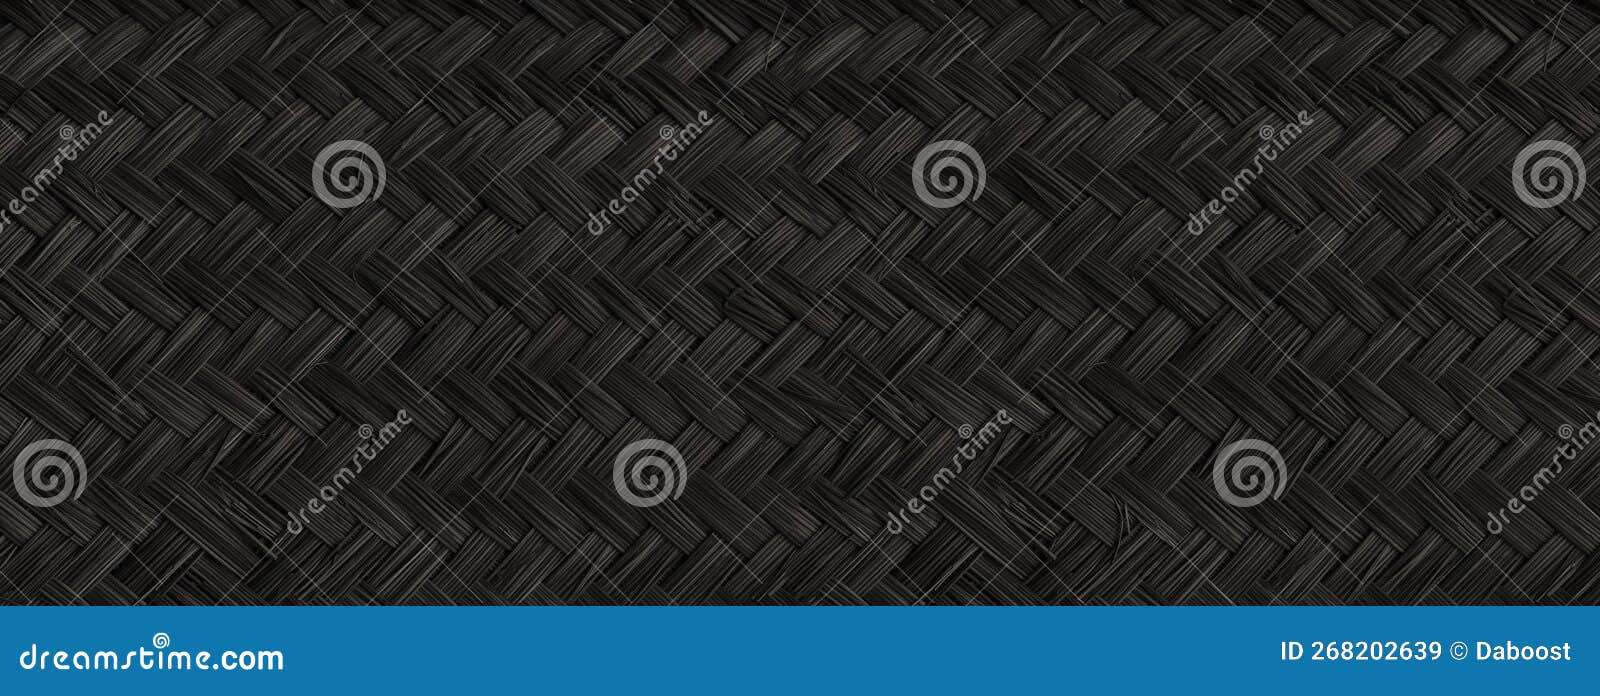 https://thumbs.dreamstime.com/z/black-woven-bamboo-mat-texture-banner-background-wallpaper-268202639.jpg